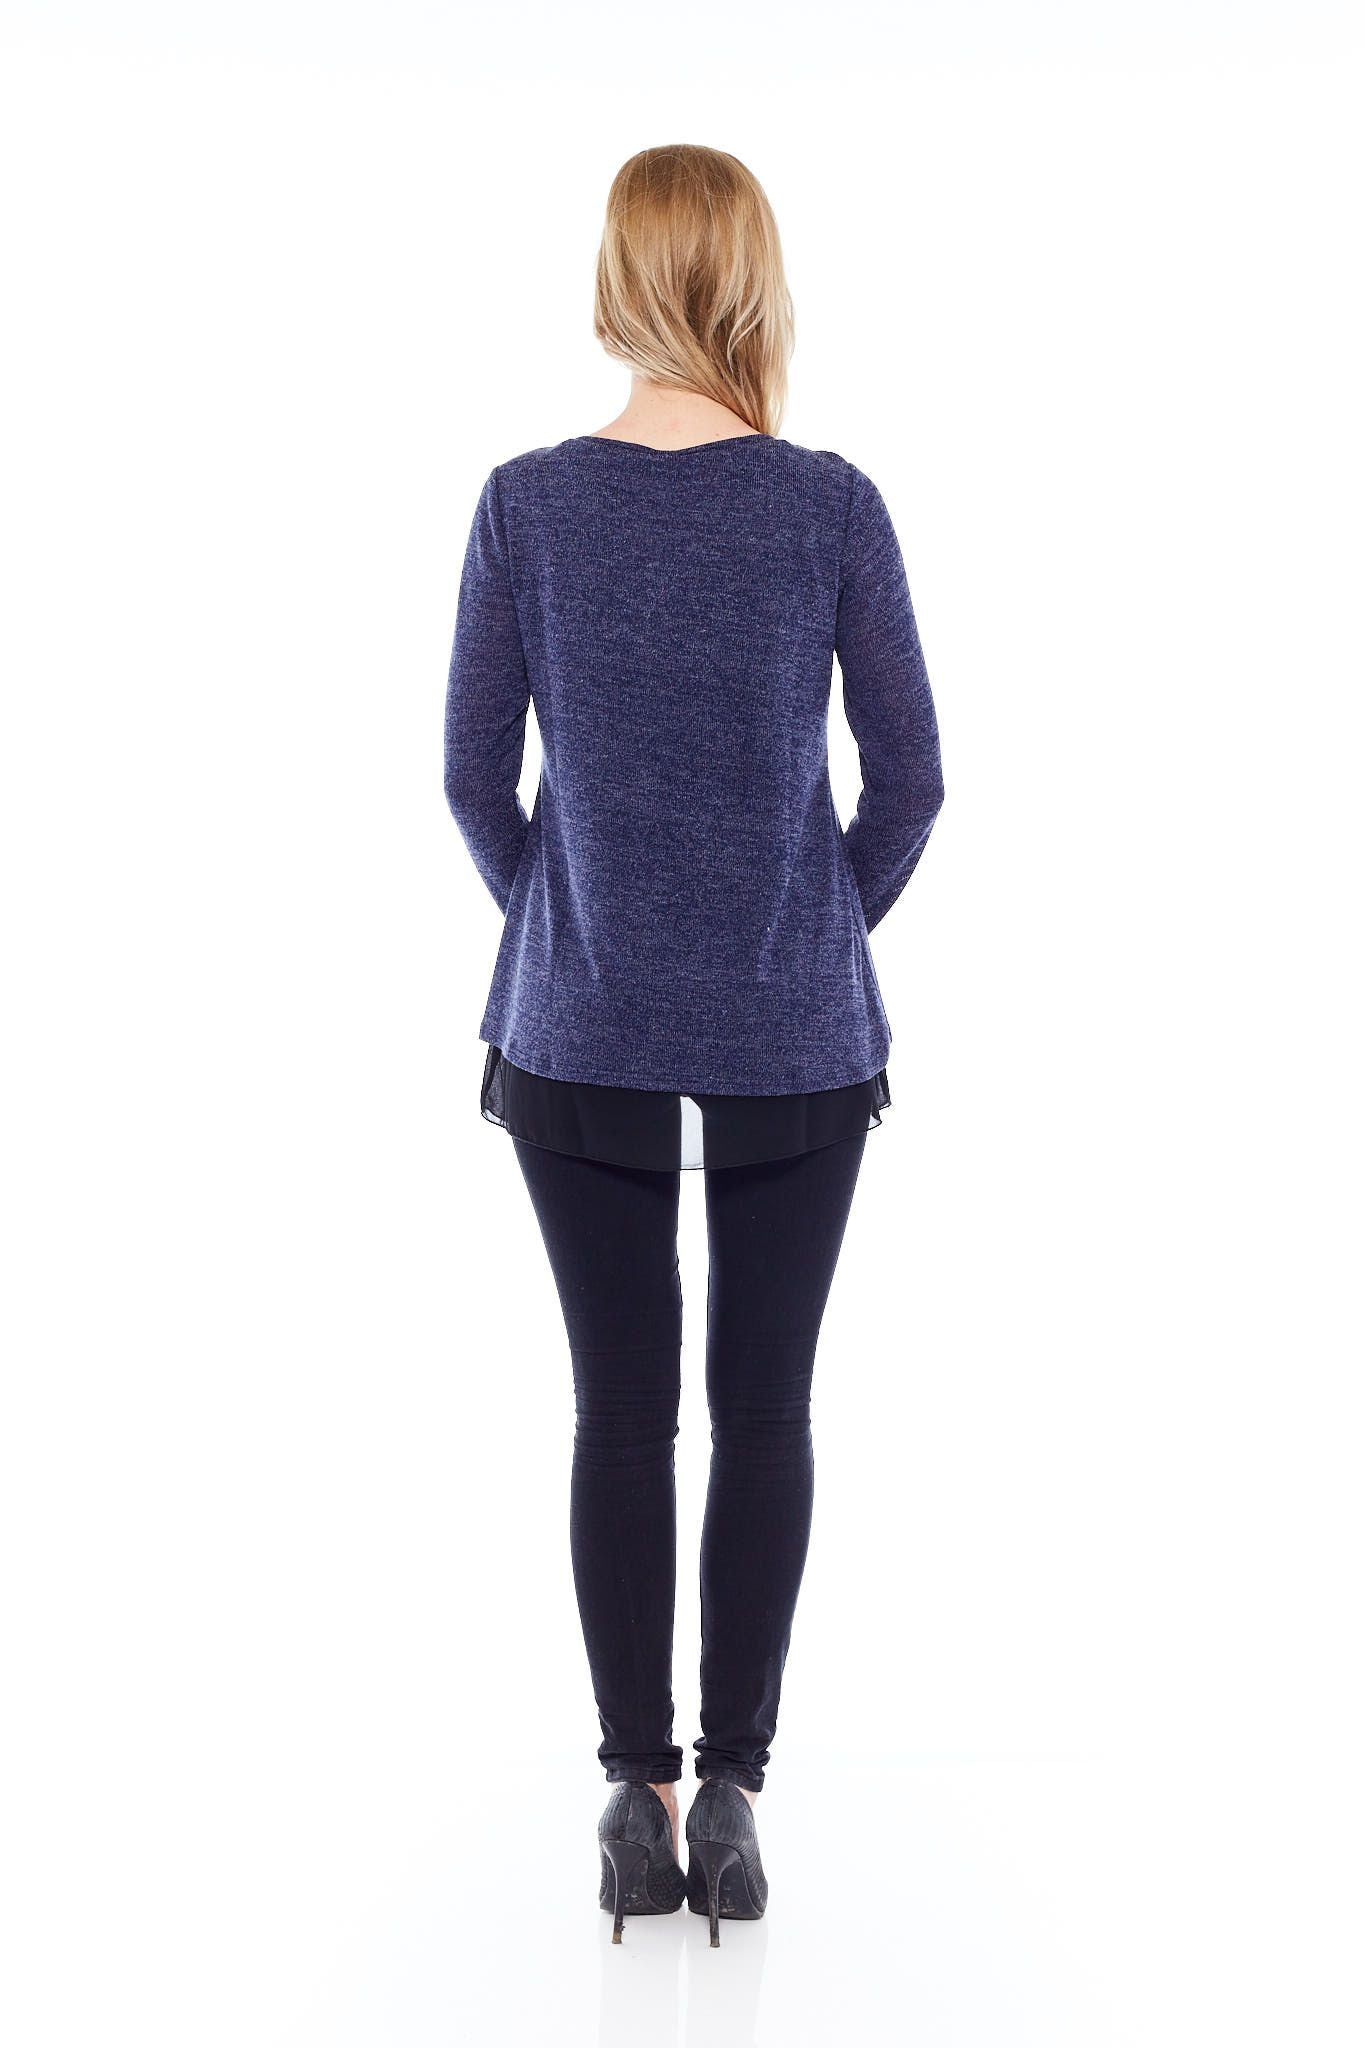 Buy Women's Long Sleeve Round Neck Blue Tops Online